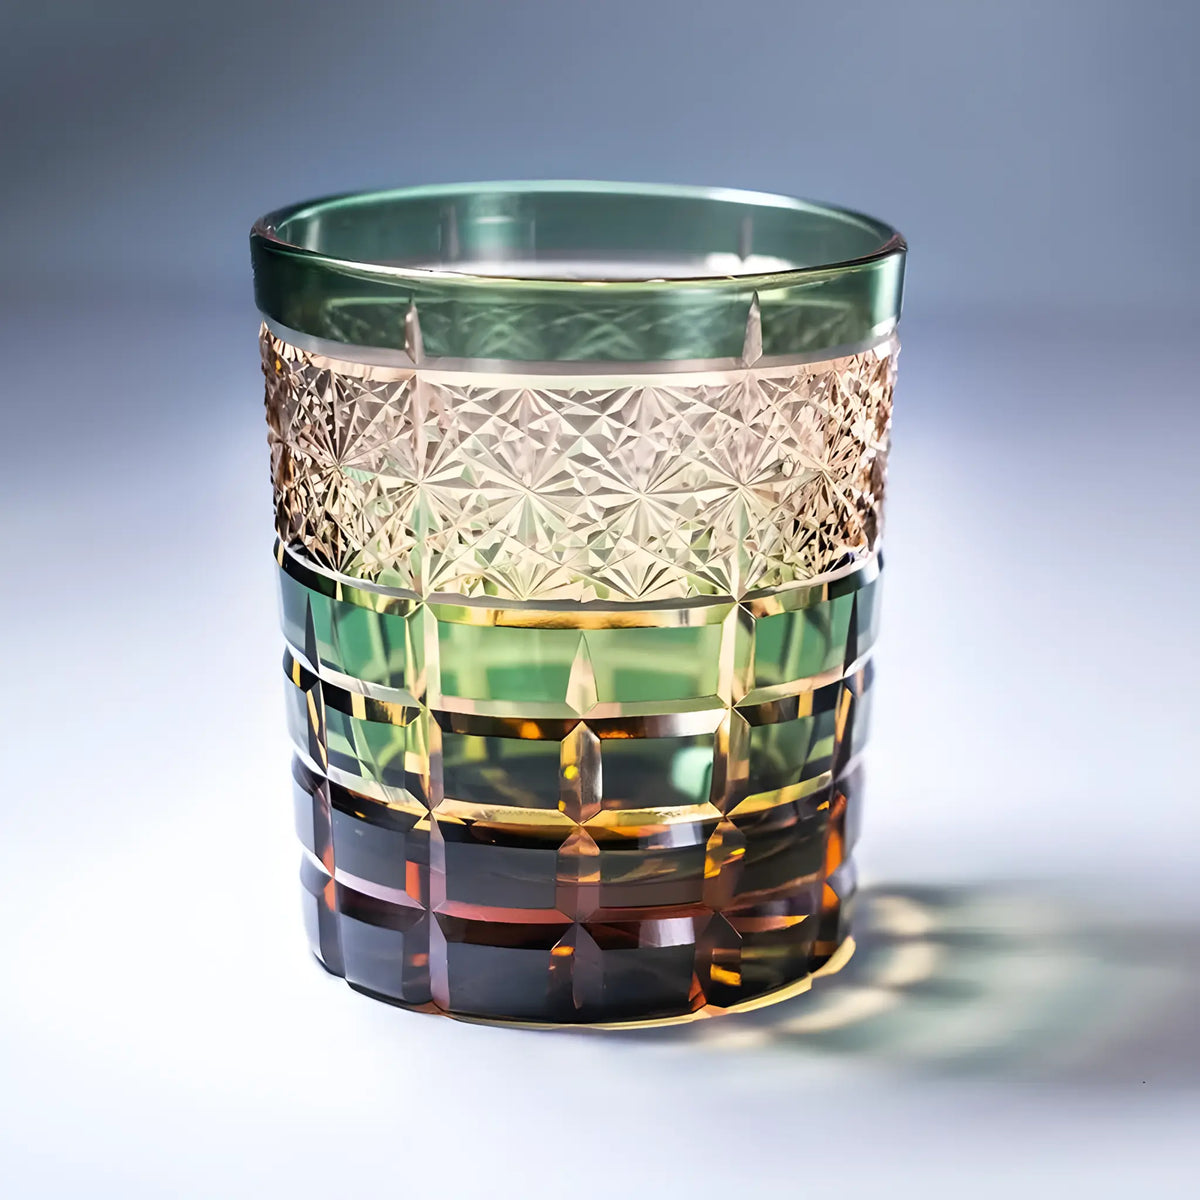 Hand-carved Crystal Whiskey Glasses 8 Oz - Macchiaco